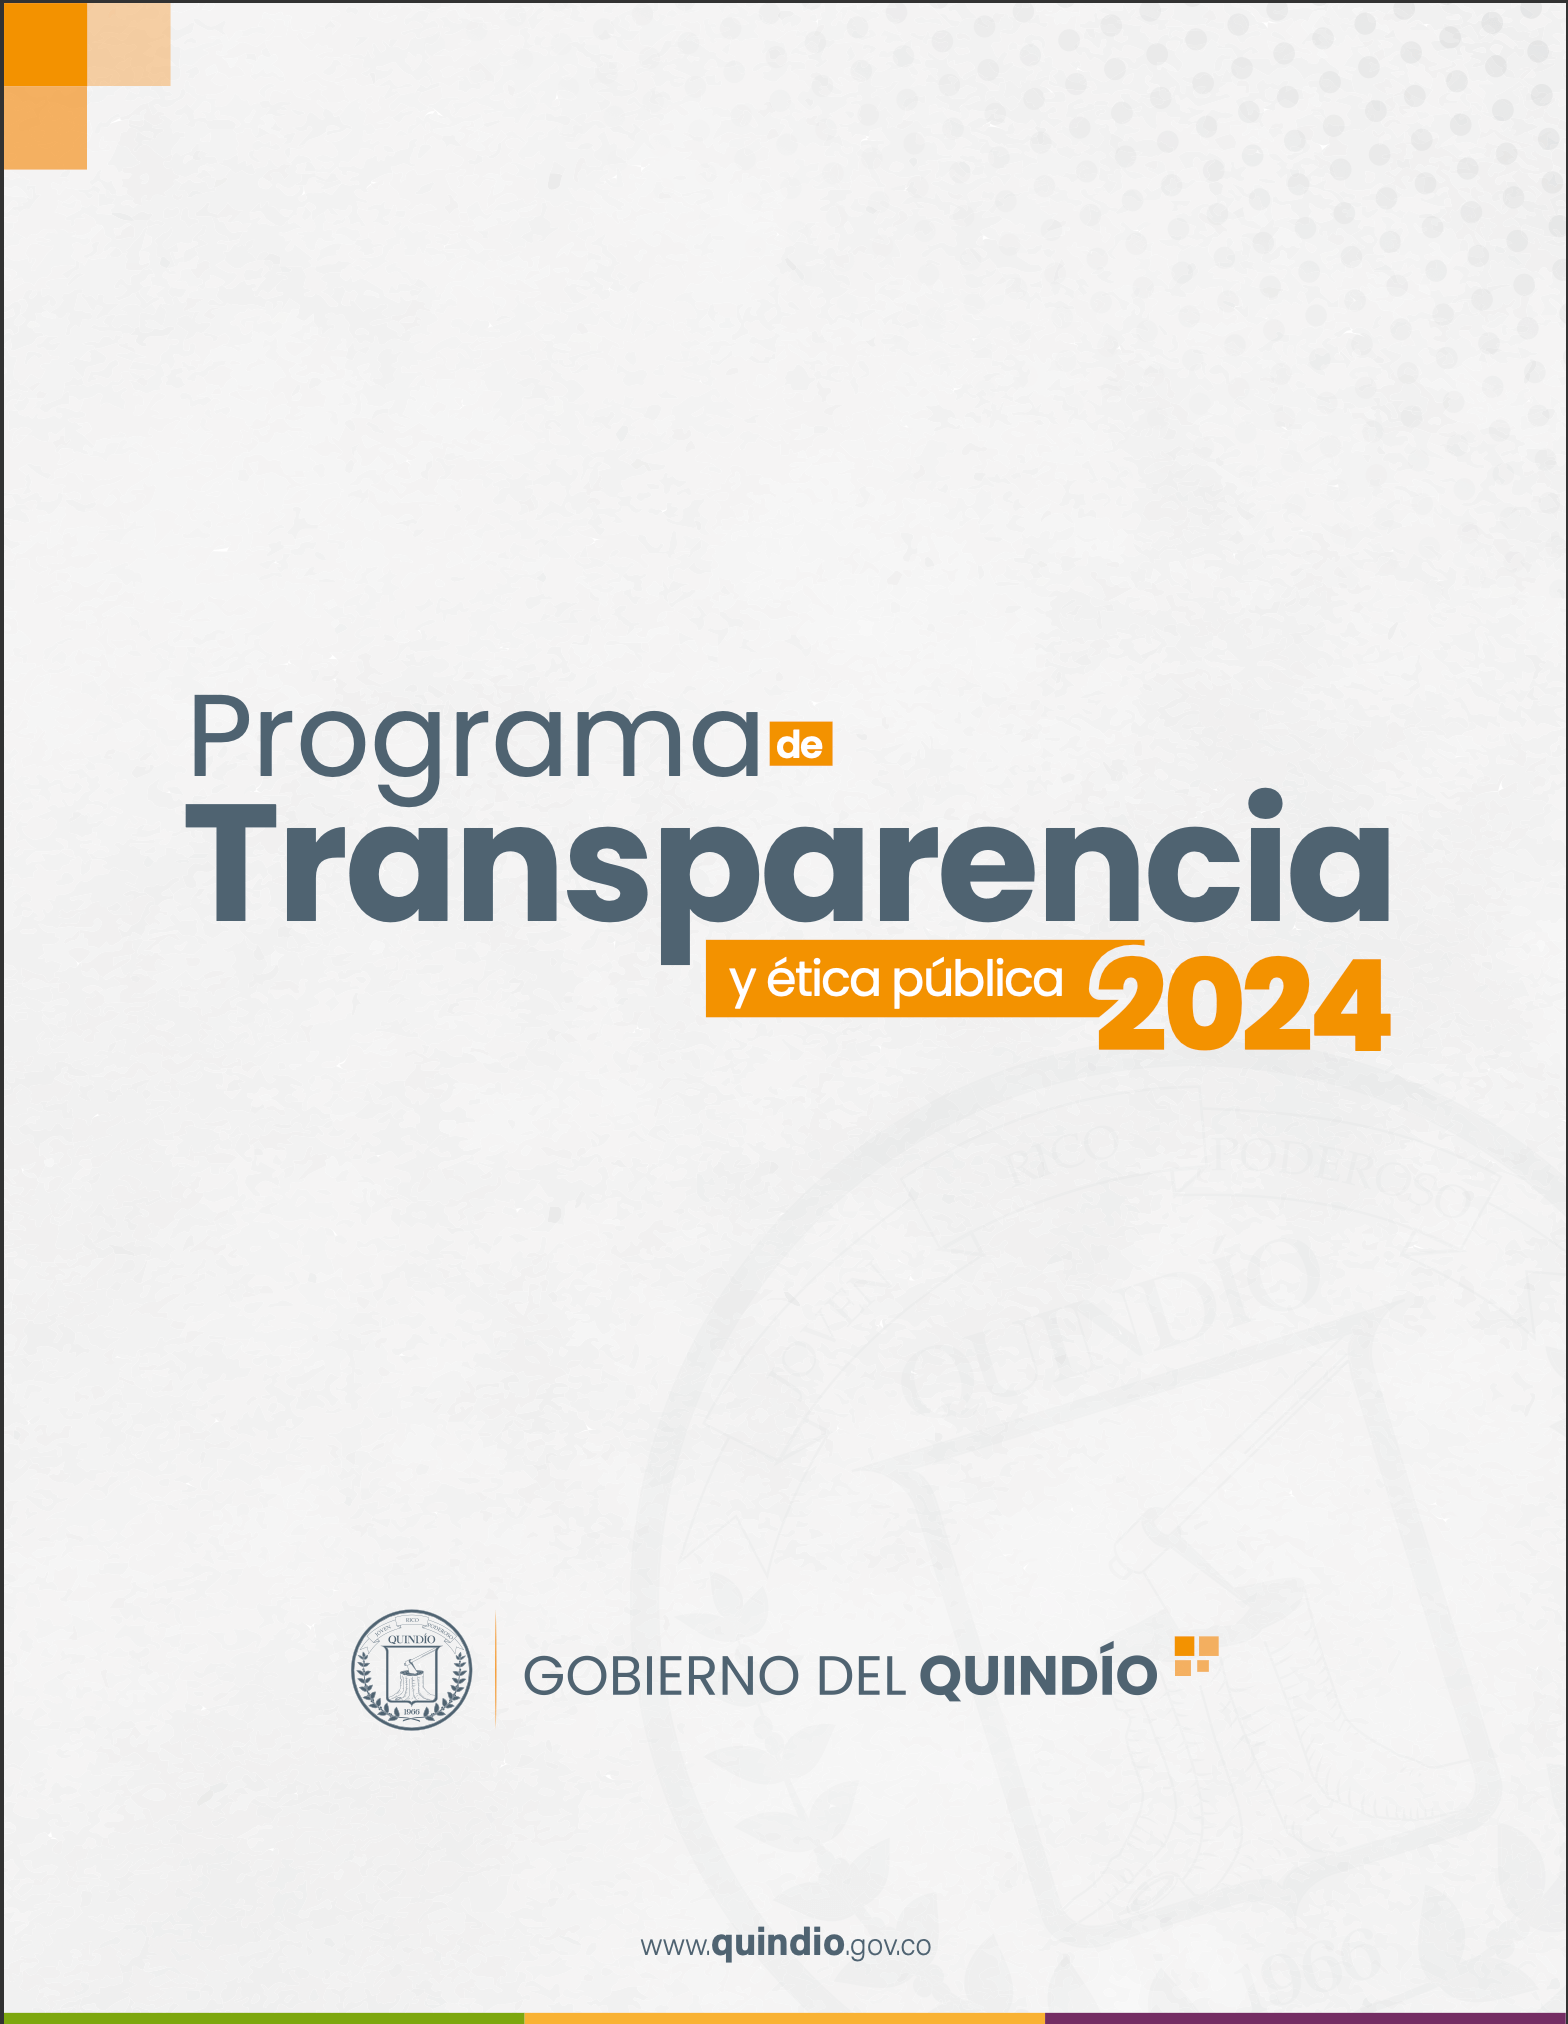 Programa_Transparencia_2024.png - 532.02 kB